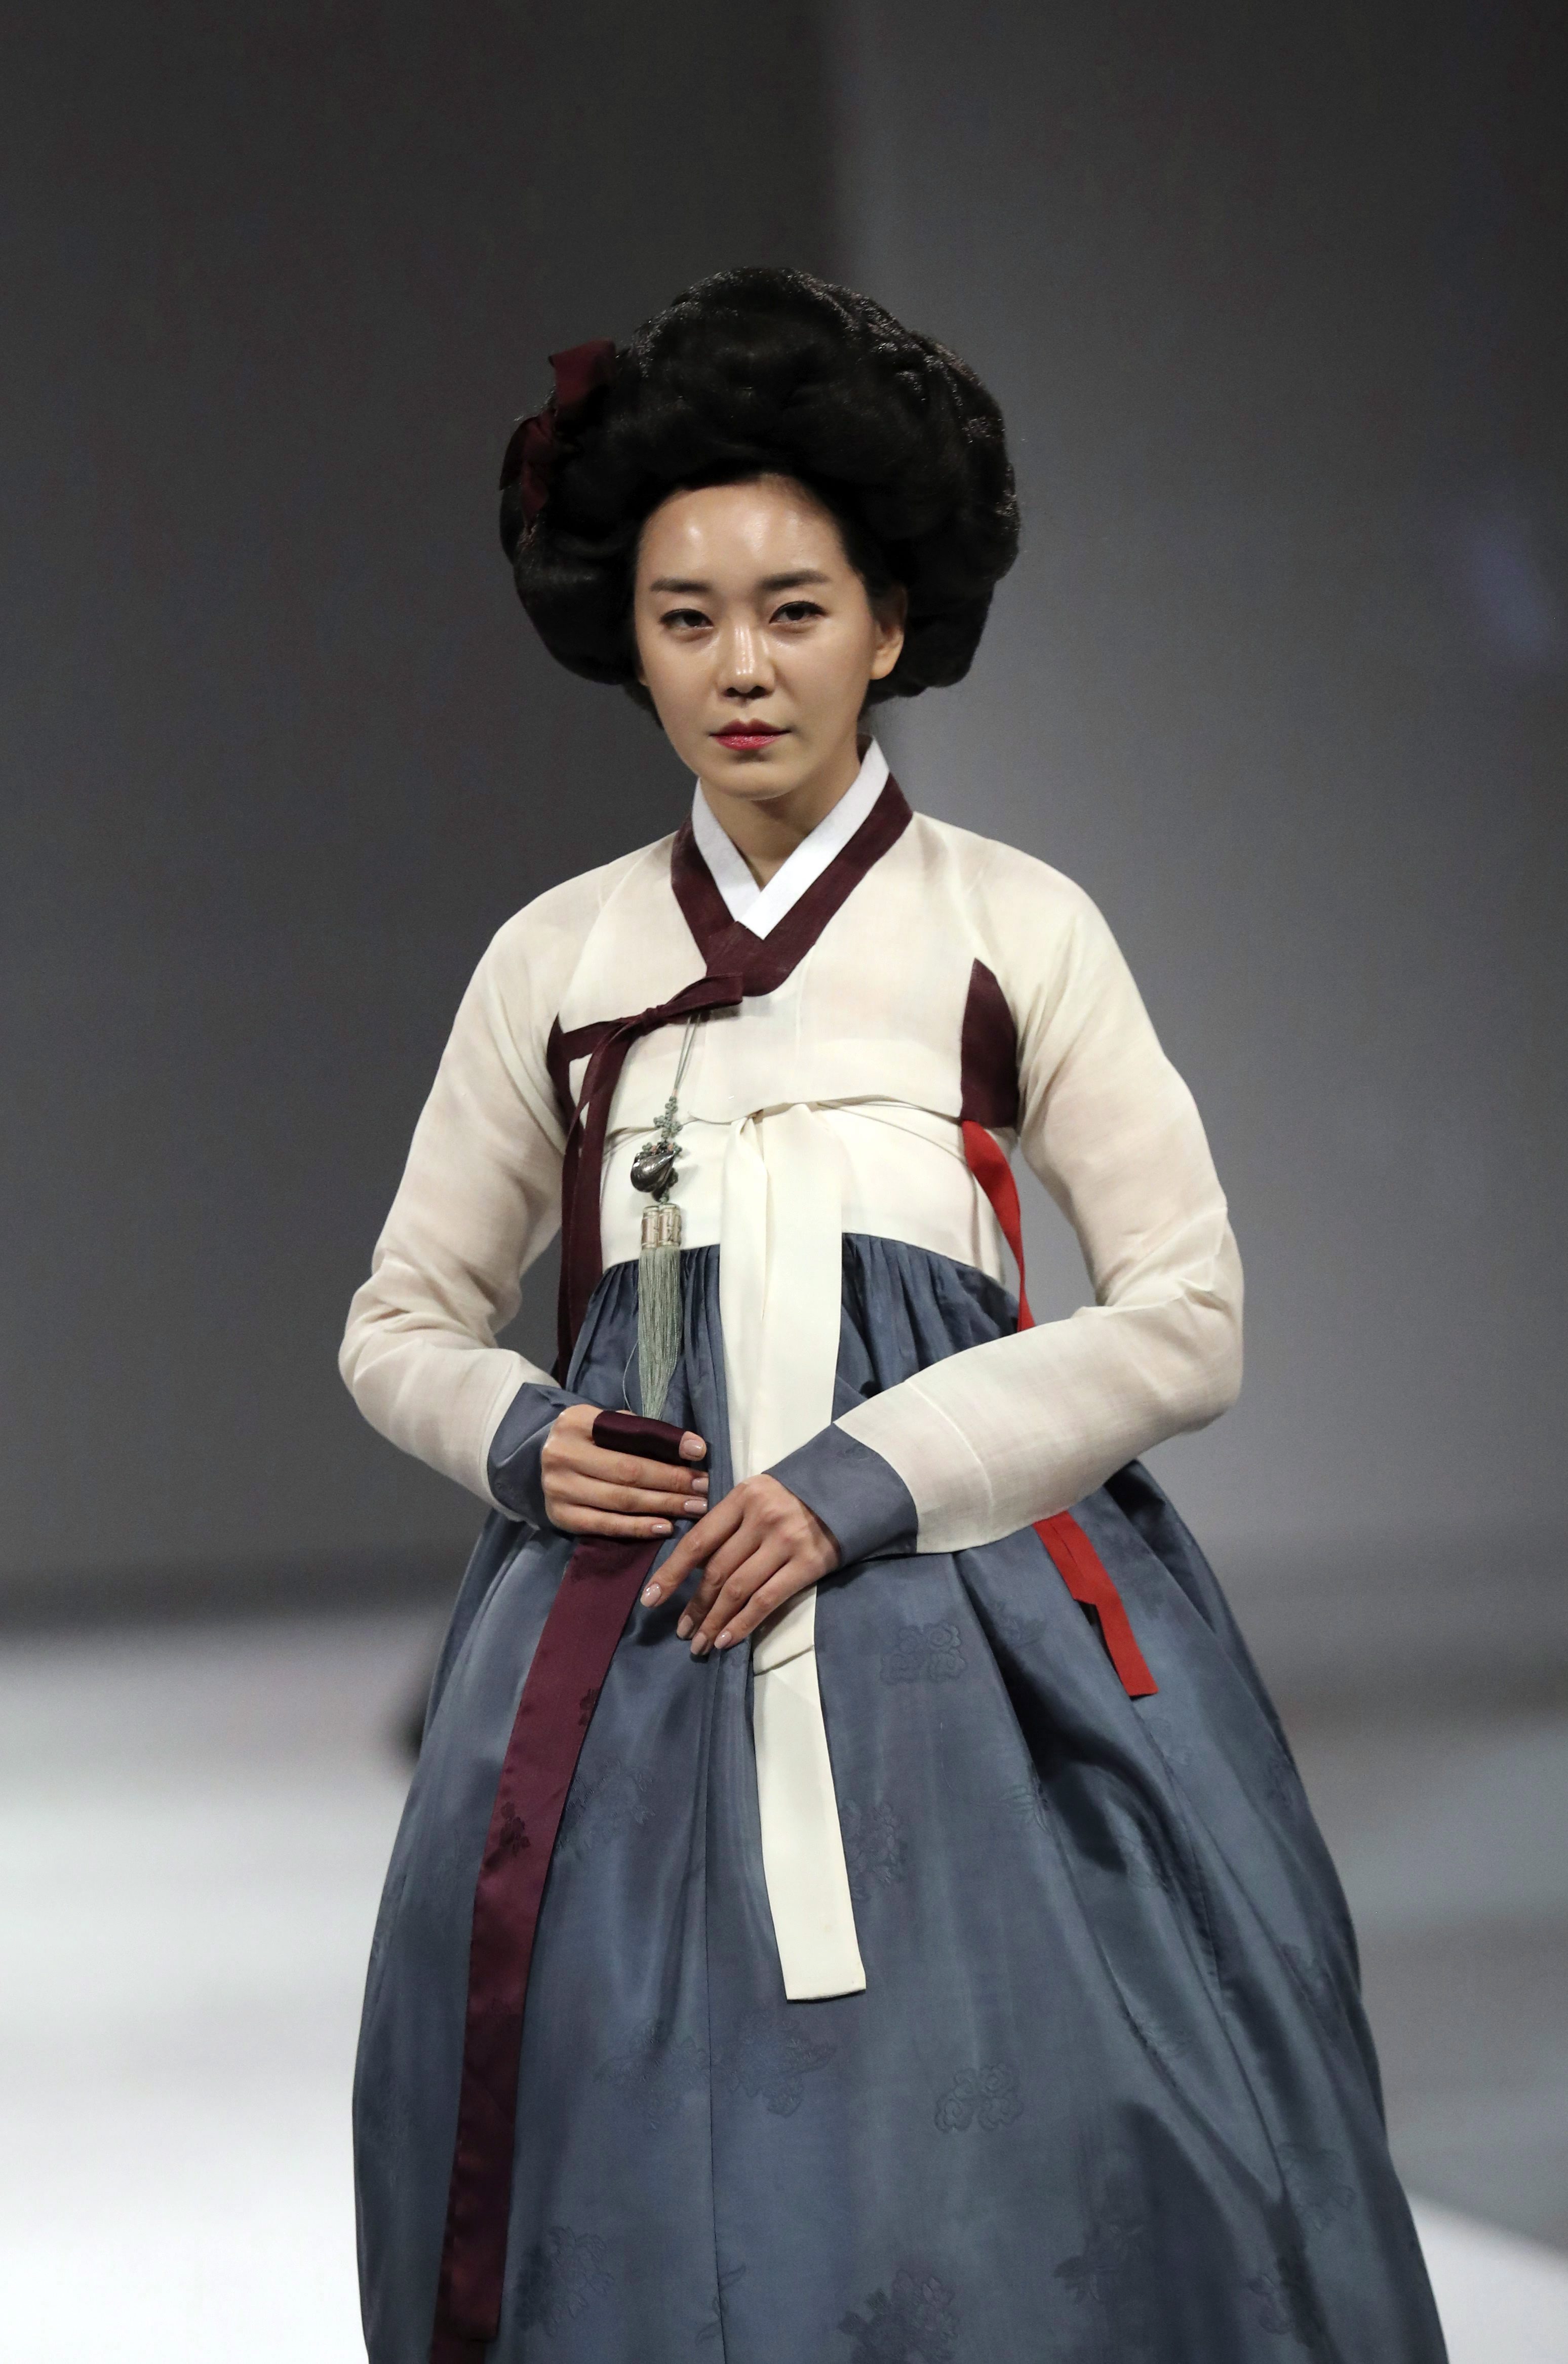 A model wears a traditional South Korean "Hanbok" dress